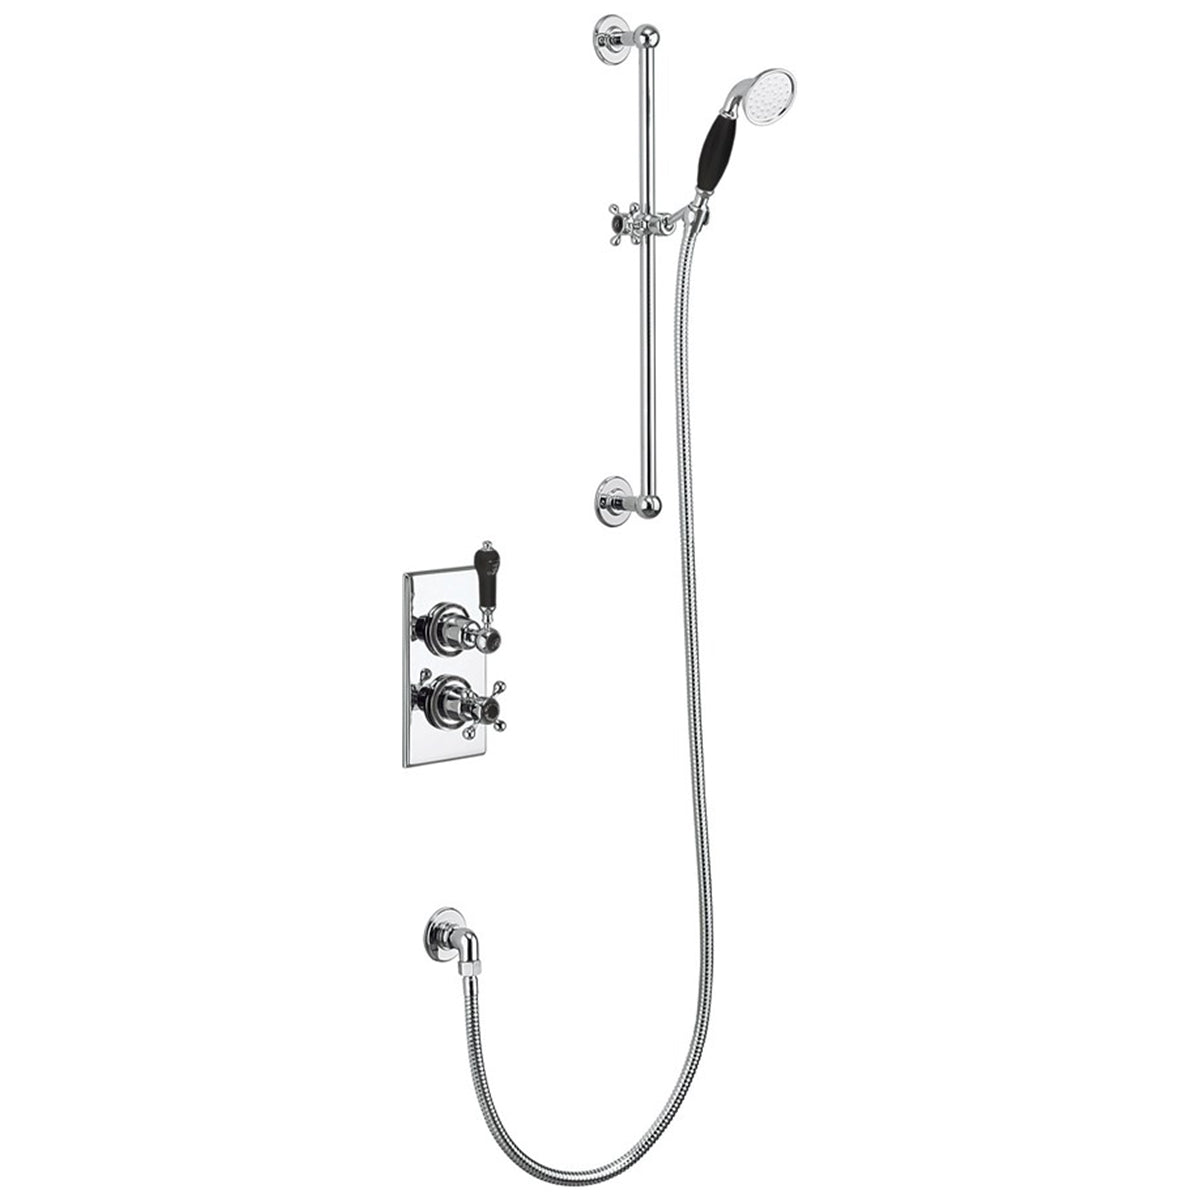 Burlington Trent Thermostatic Single Outlet Shower Valve with Slide Rail Handset Deluxe Bathrooms UK